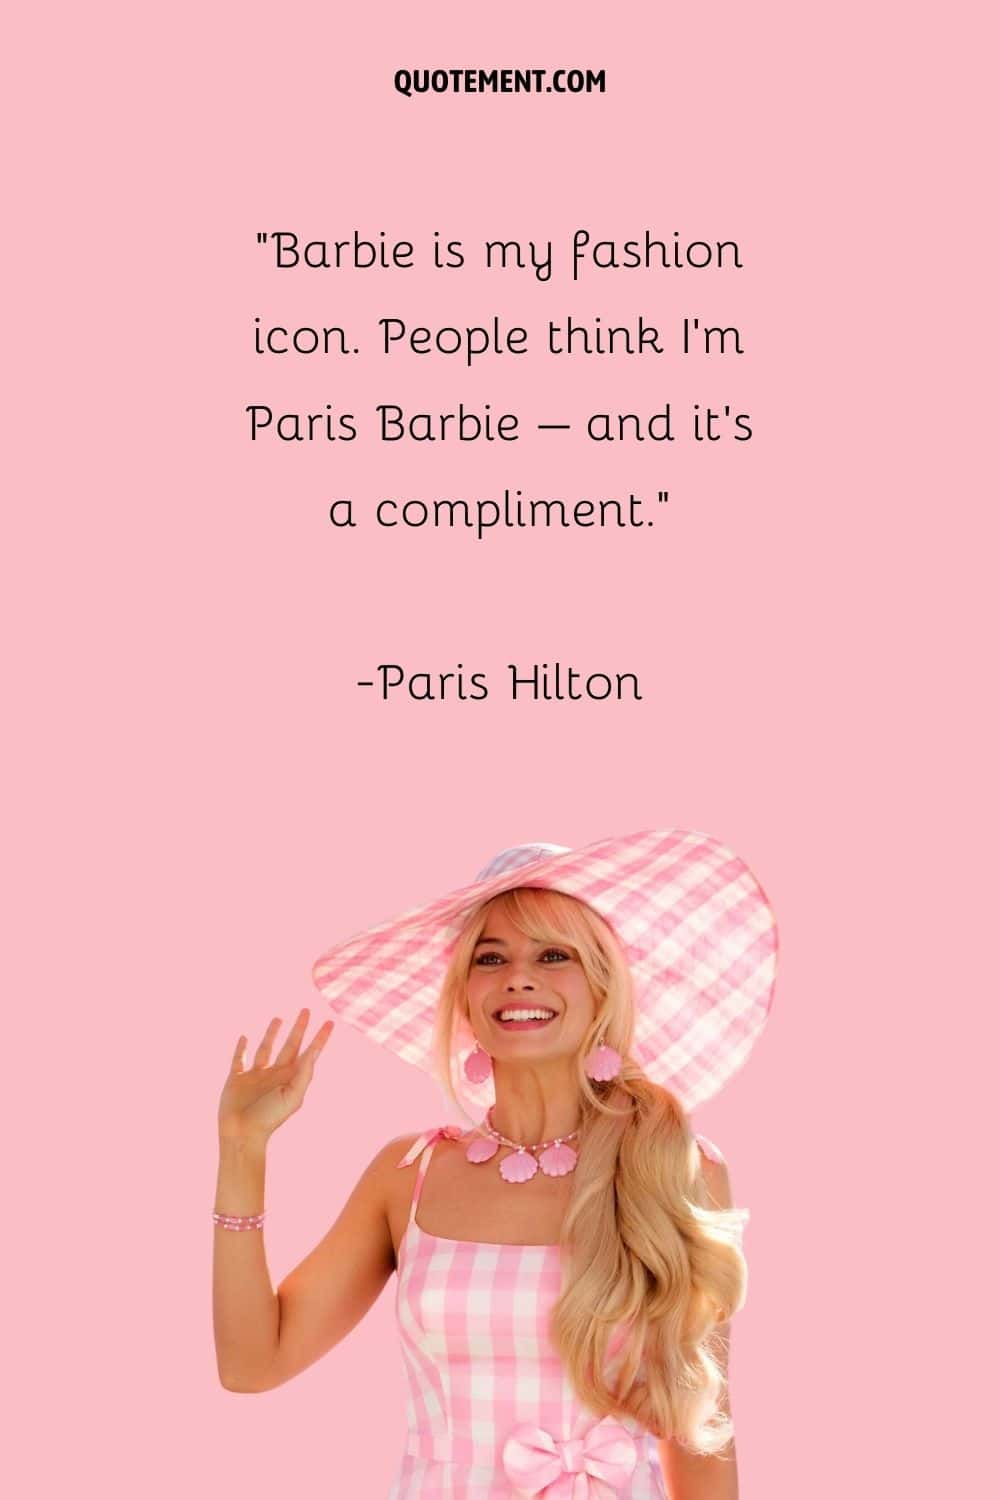 Barbie is my fashion icon